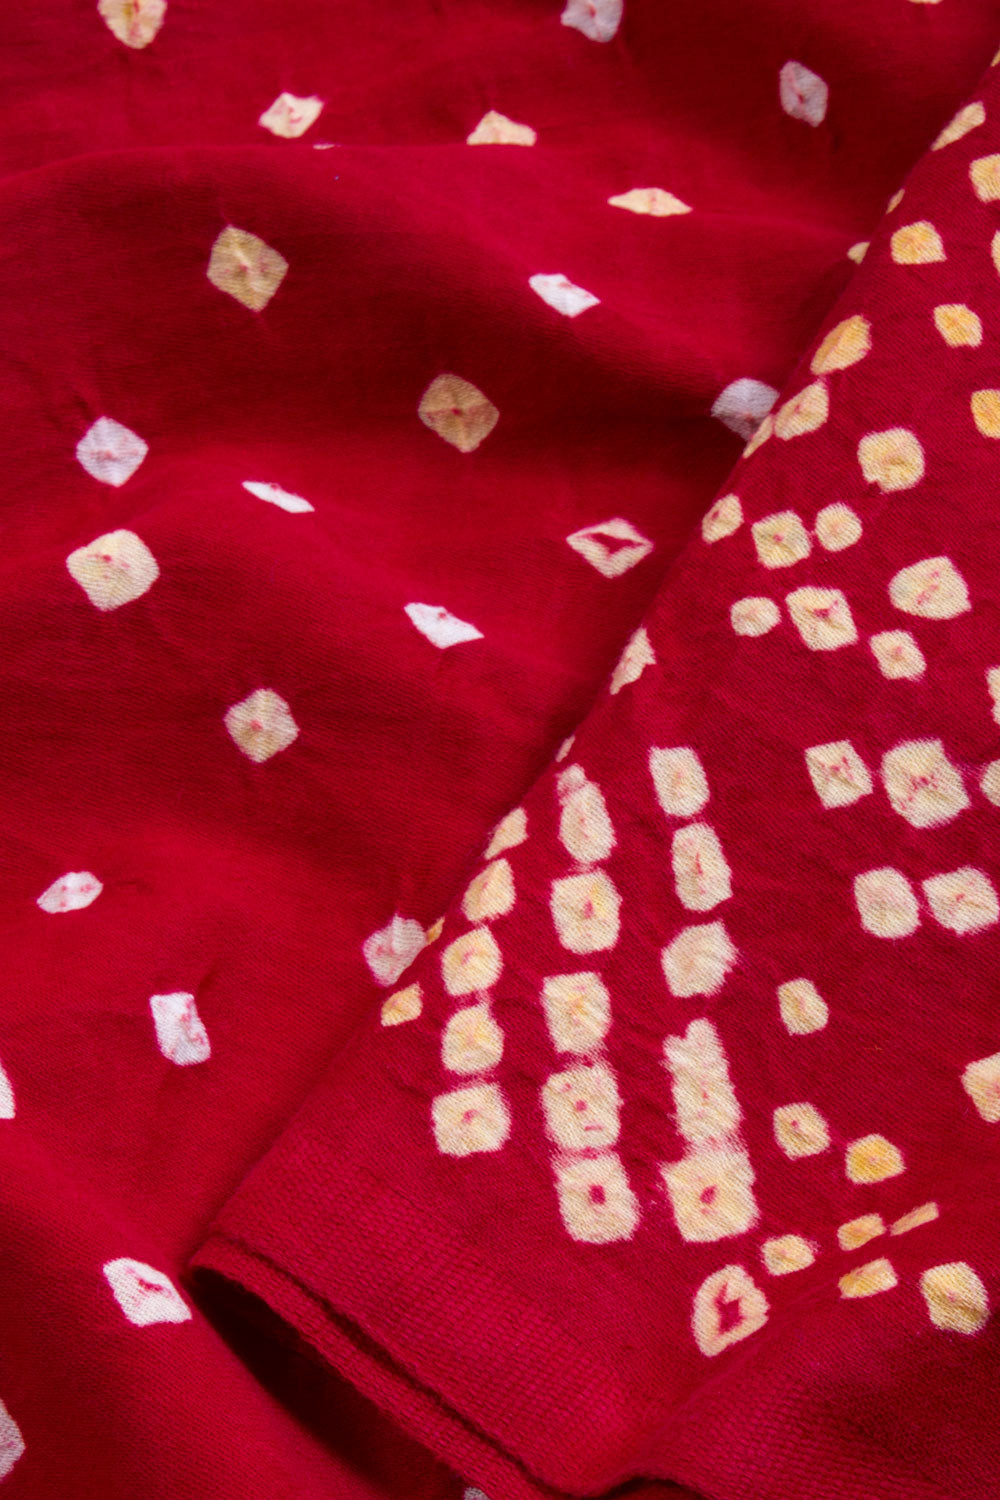 Red Handcrafted Bandhani Cotton Saree  - Avishya